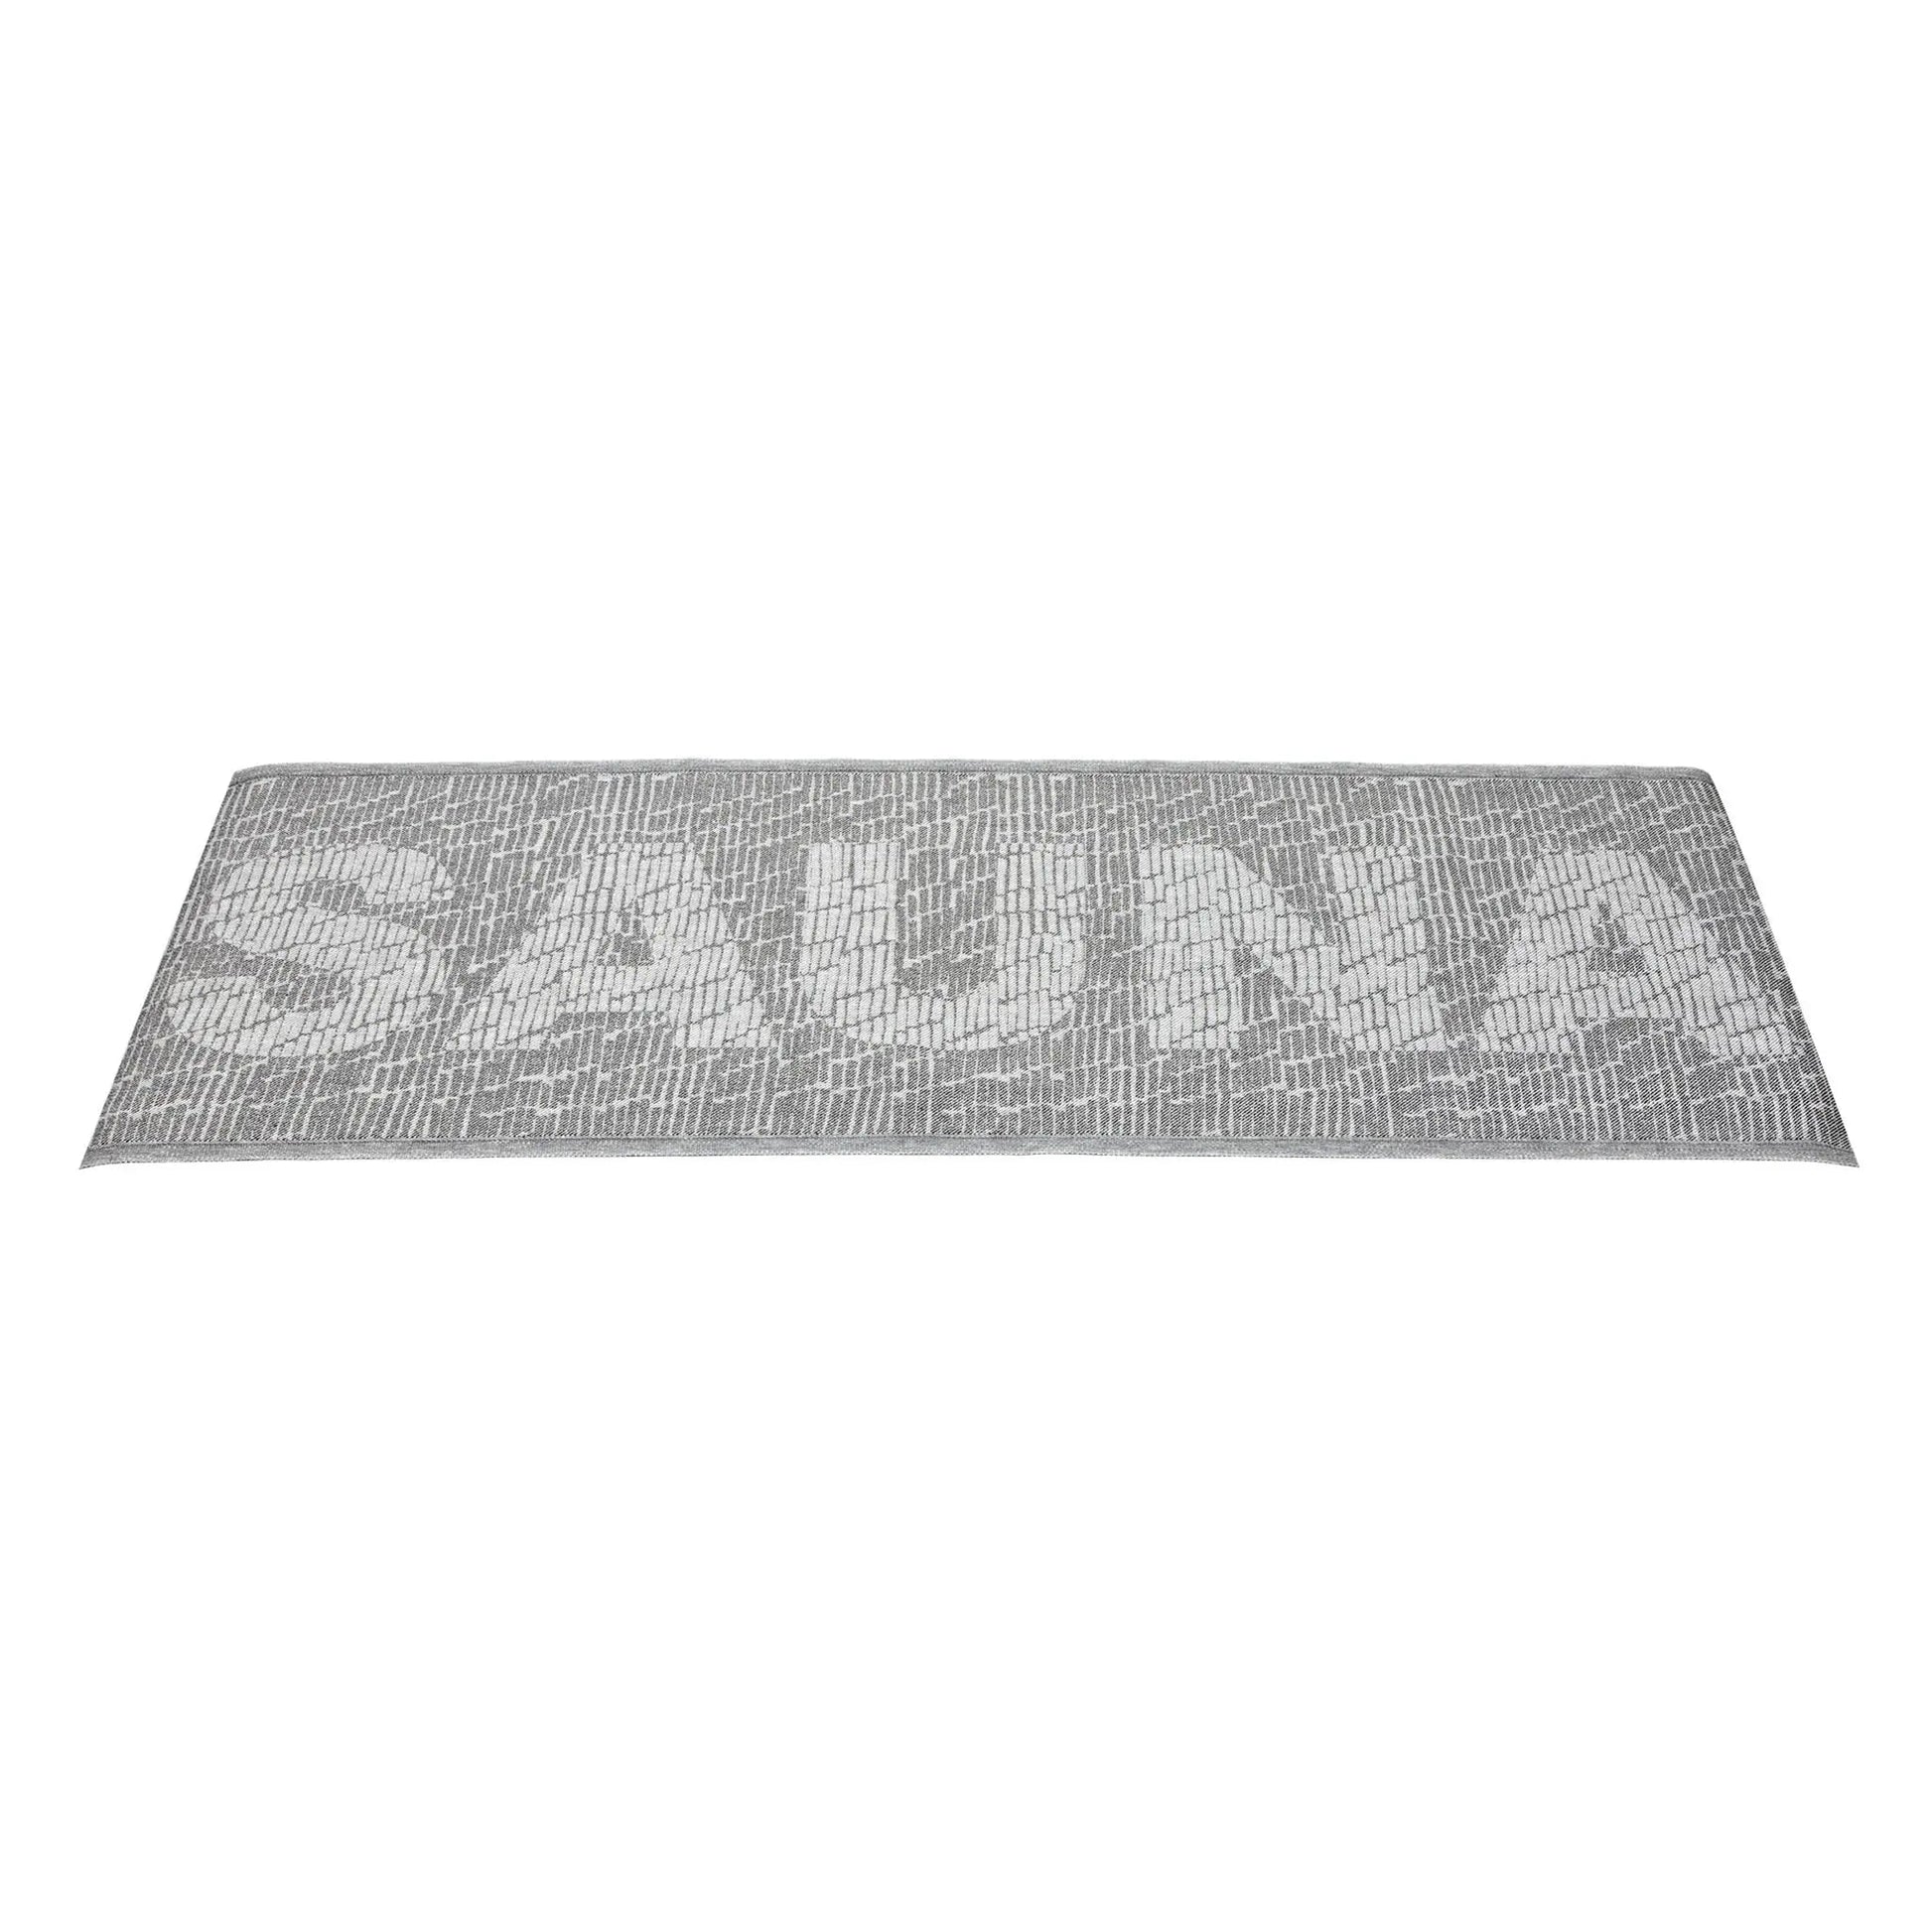 Saunatikut Seat Cover by Jokipiin white/black Sauna Seat Cover | Finnmark Sauna